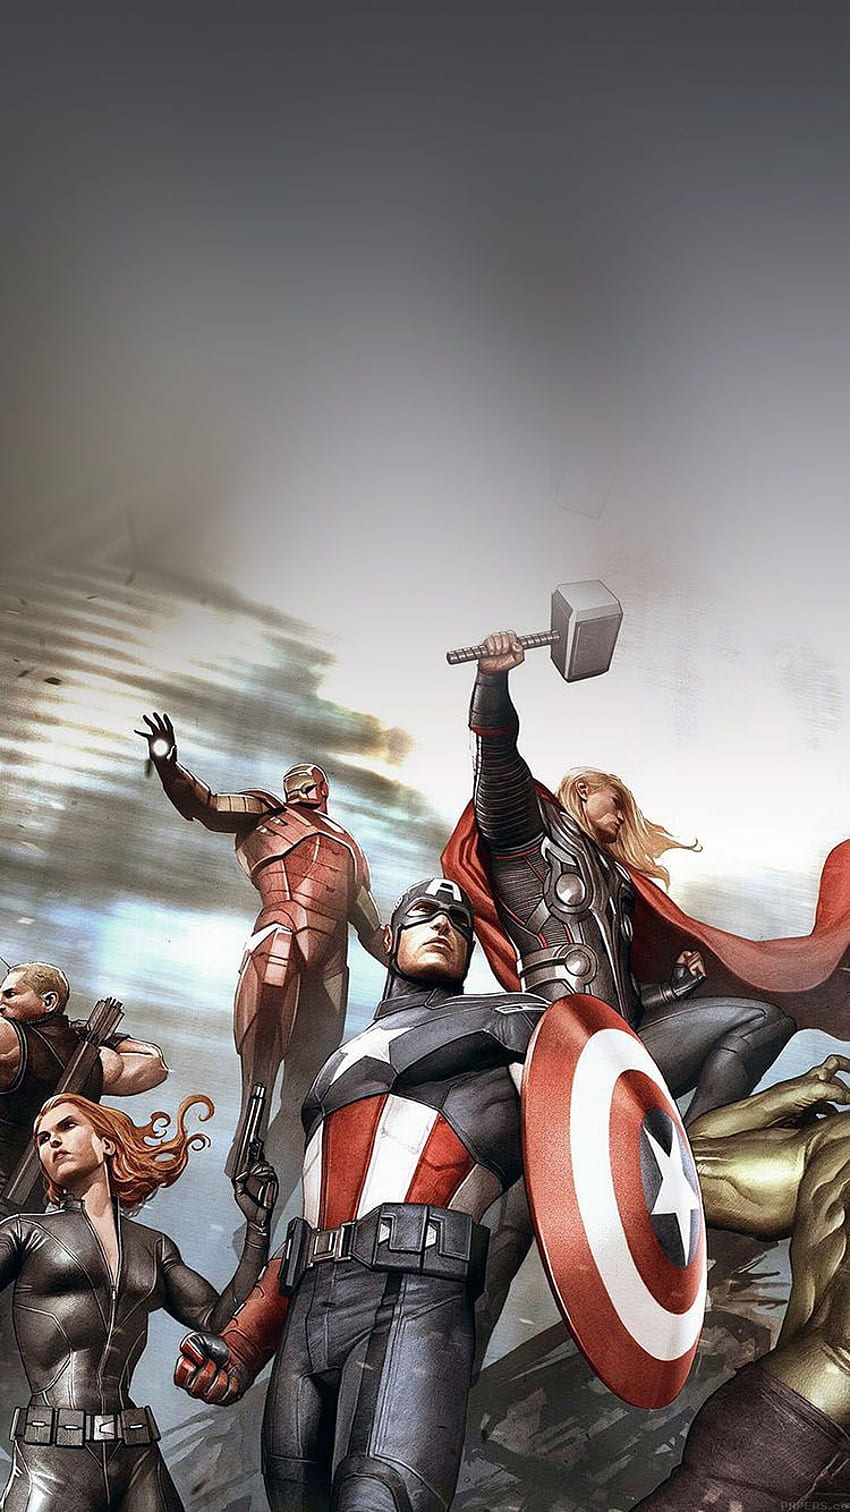 Ƒ↑TIPPEN UND DIE APP HERUNTERLADEN! Für Geeks Filme & Musik Avengers Hulk Iron Man Captain America Thor Bla. Capitao America, Vingadores, Plano de fundo iphone, LEGO Marvel HD-Handy-Hintergrundbild